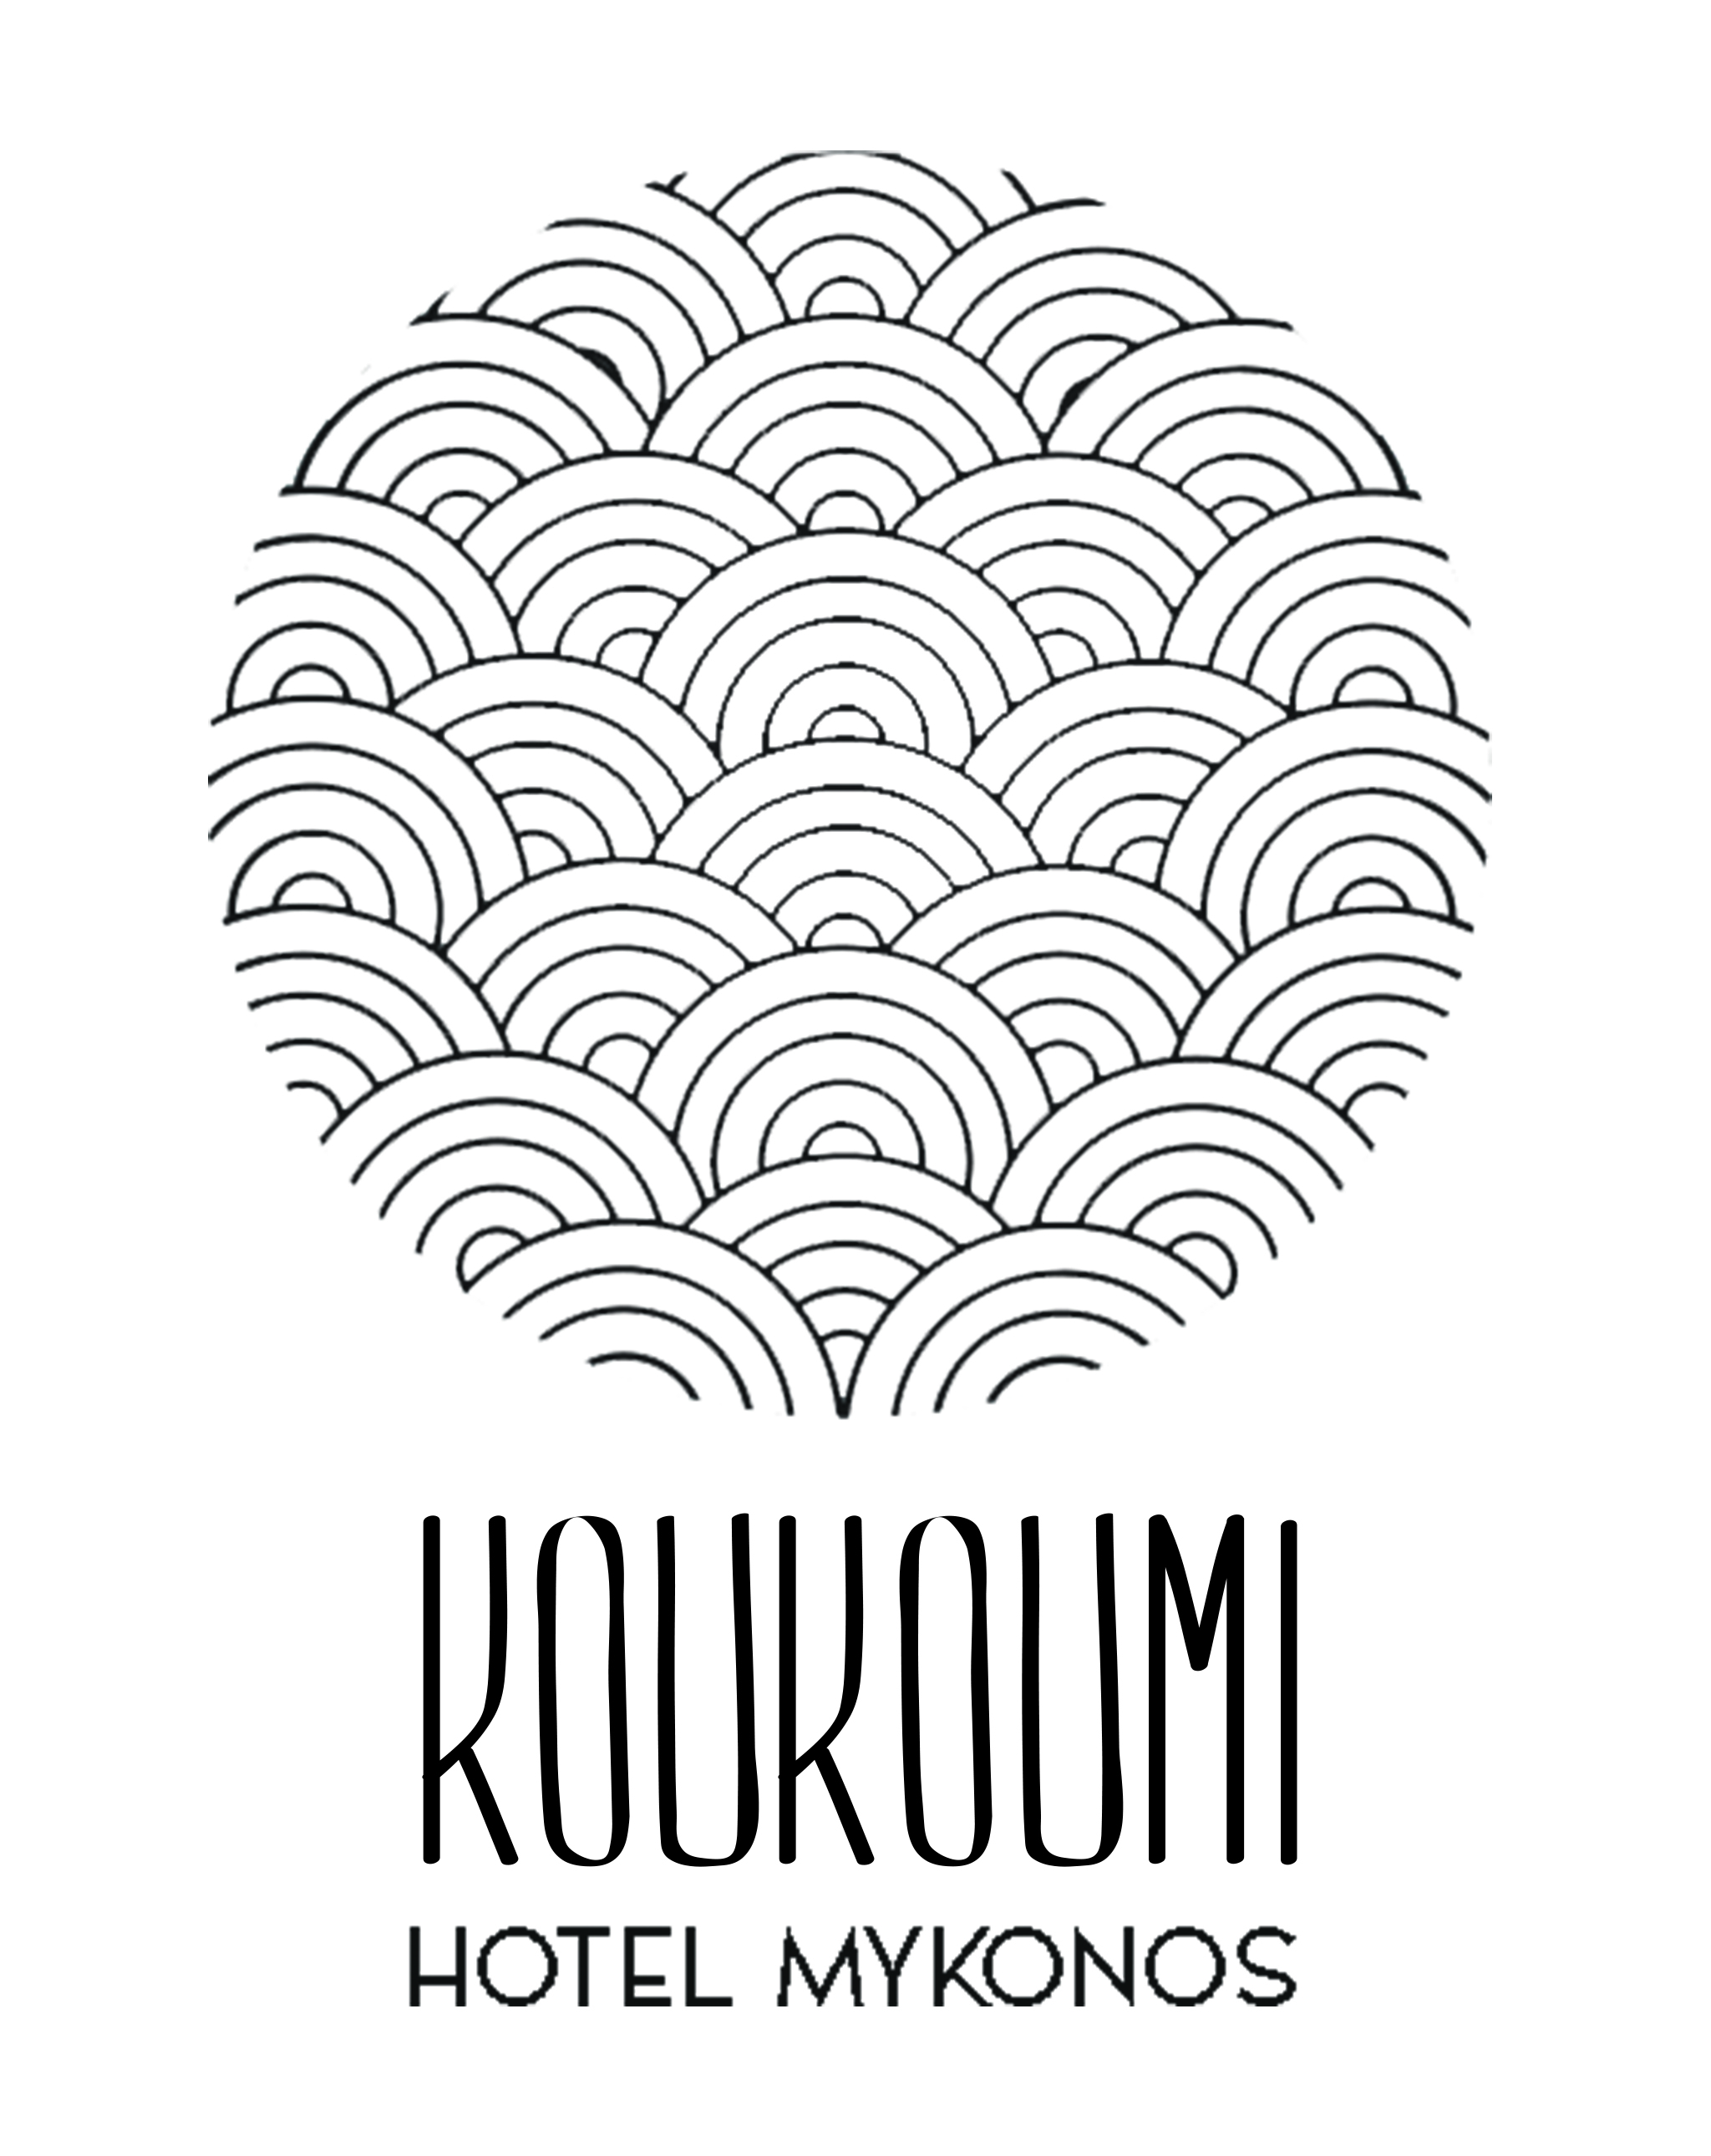 Koukoumi Hotel Mykonos